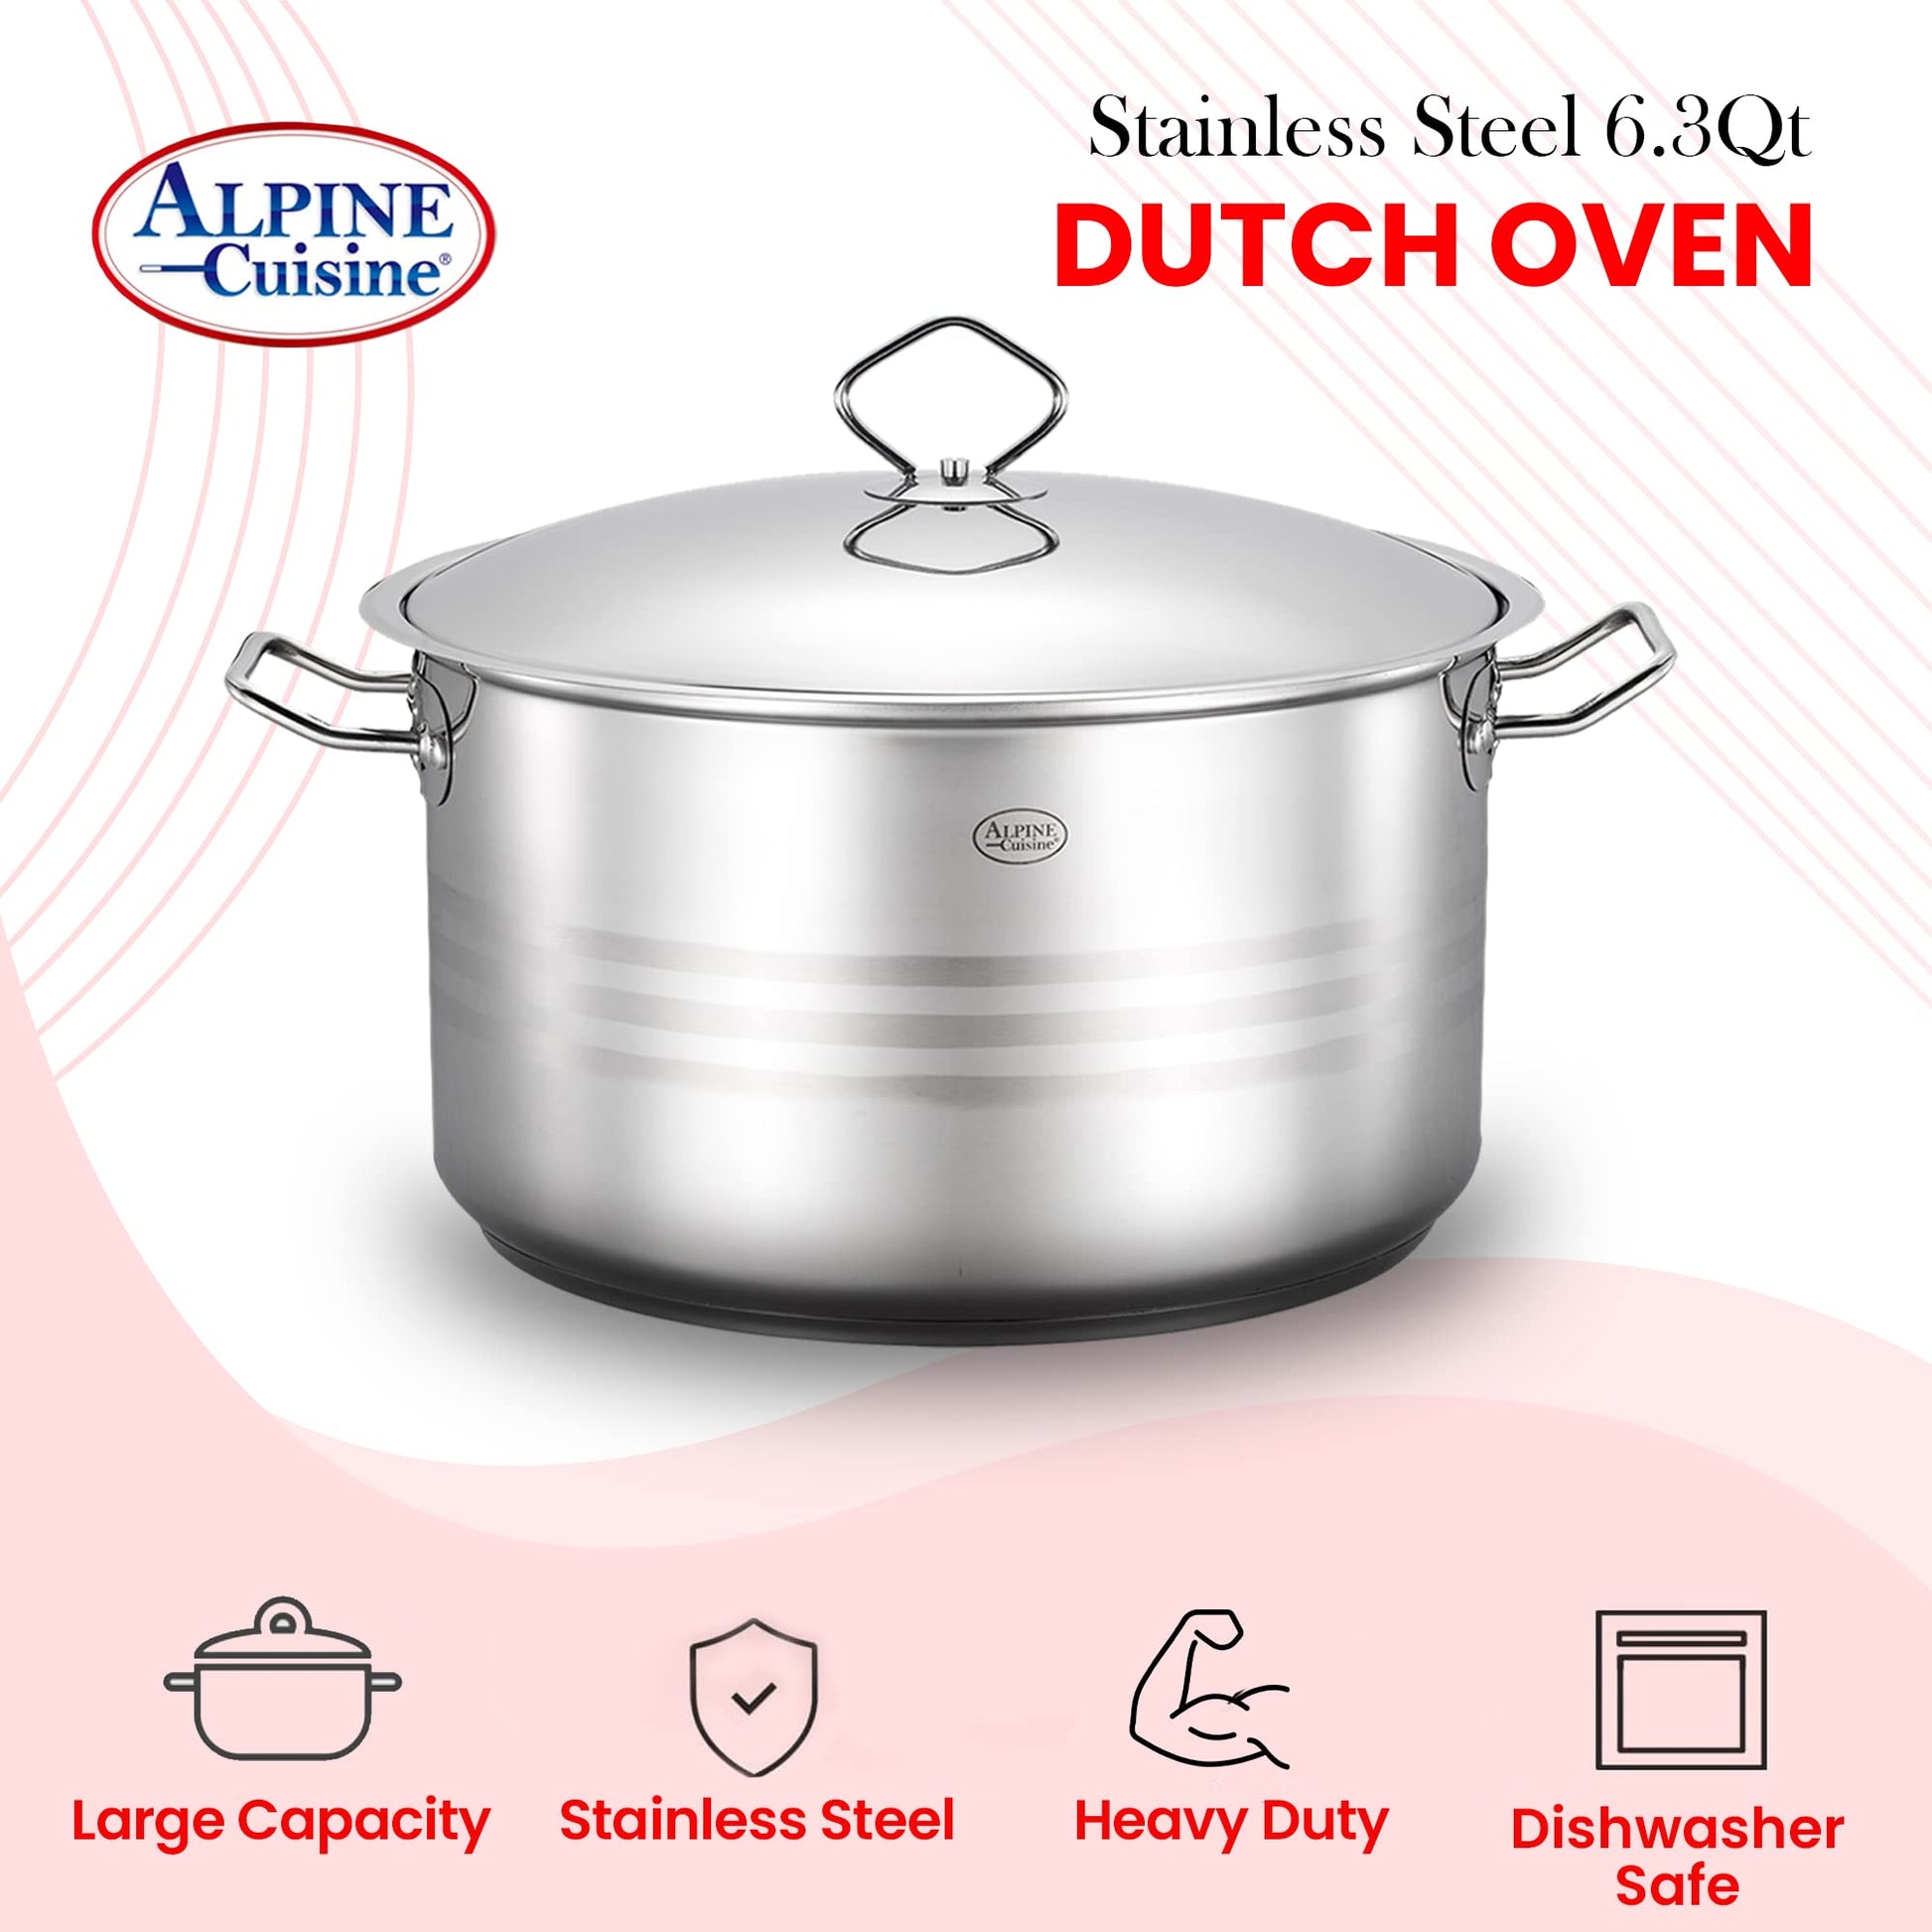  Alpine Cuisine Stainless Steel Dutch Oven Belly Shape